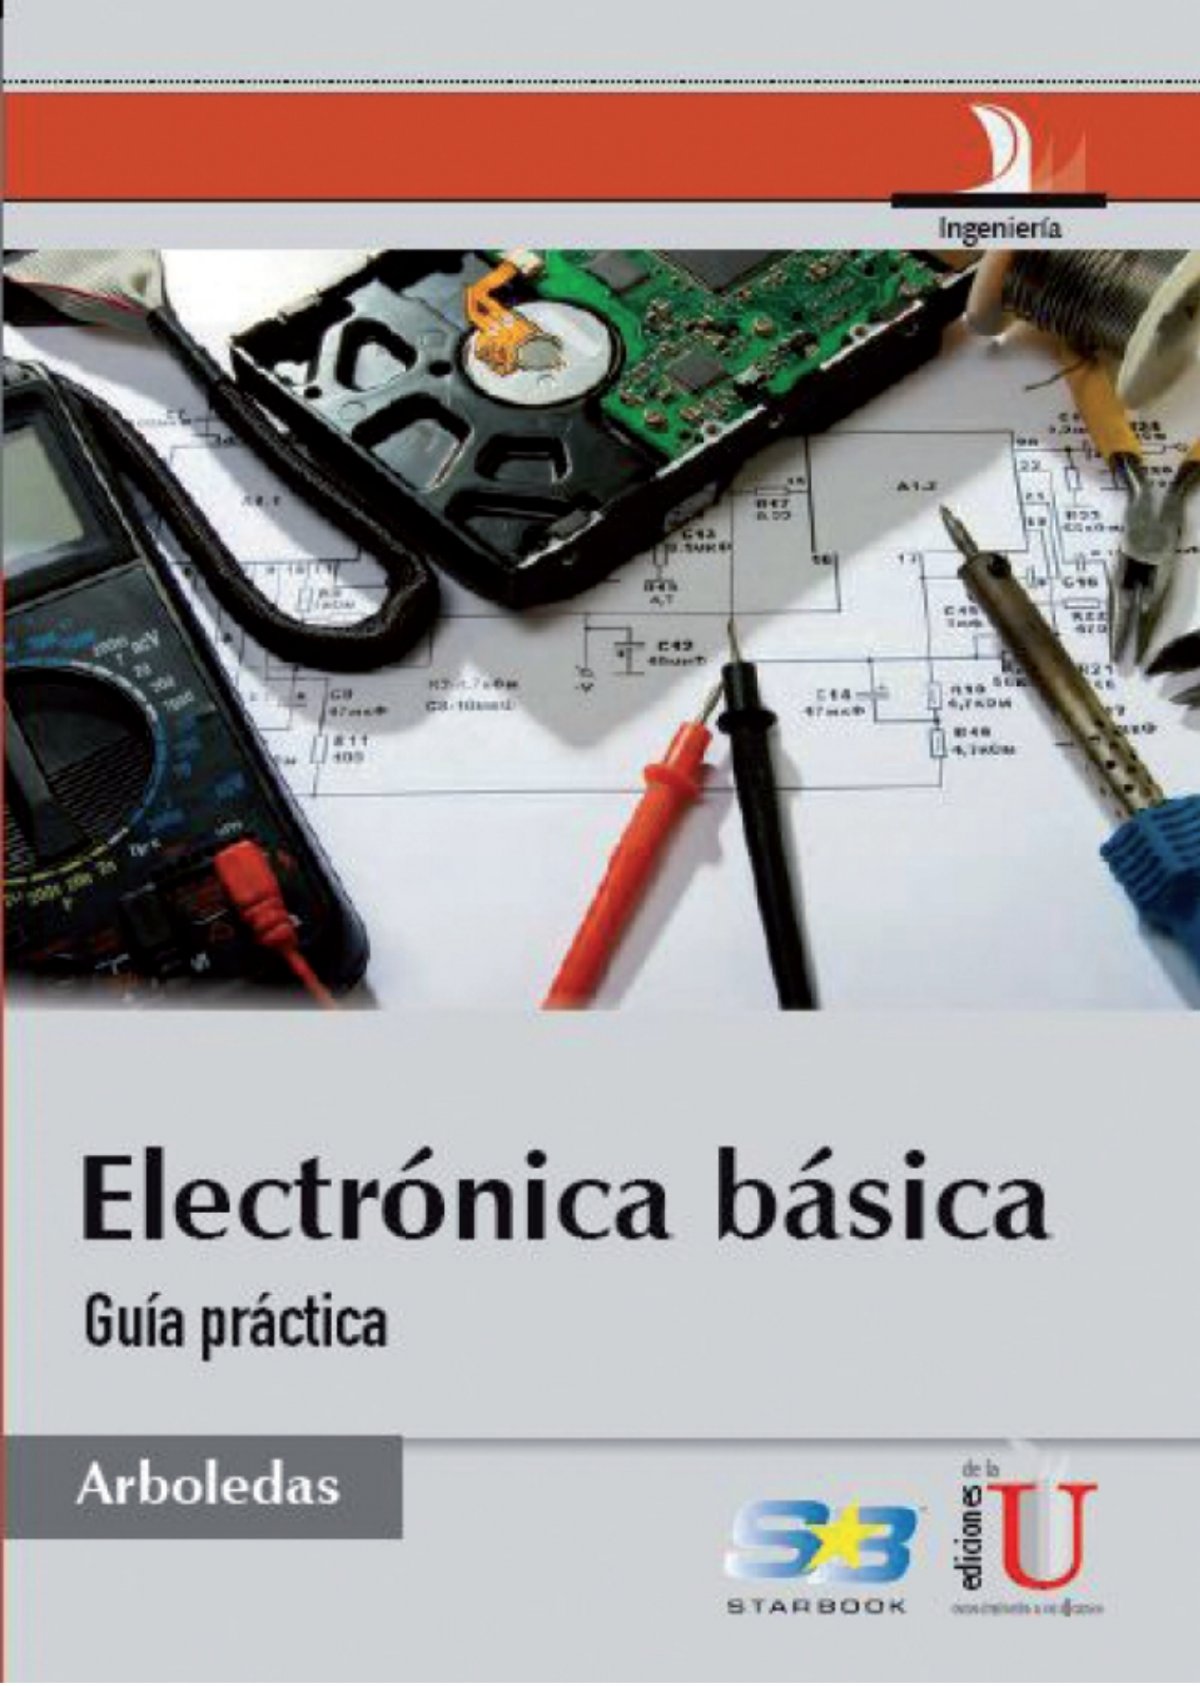 Curso de electrónica básica #2.1: Resistencia eléctrica o electrónica 